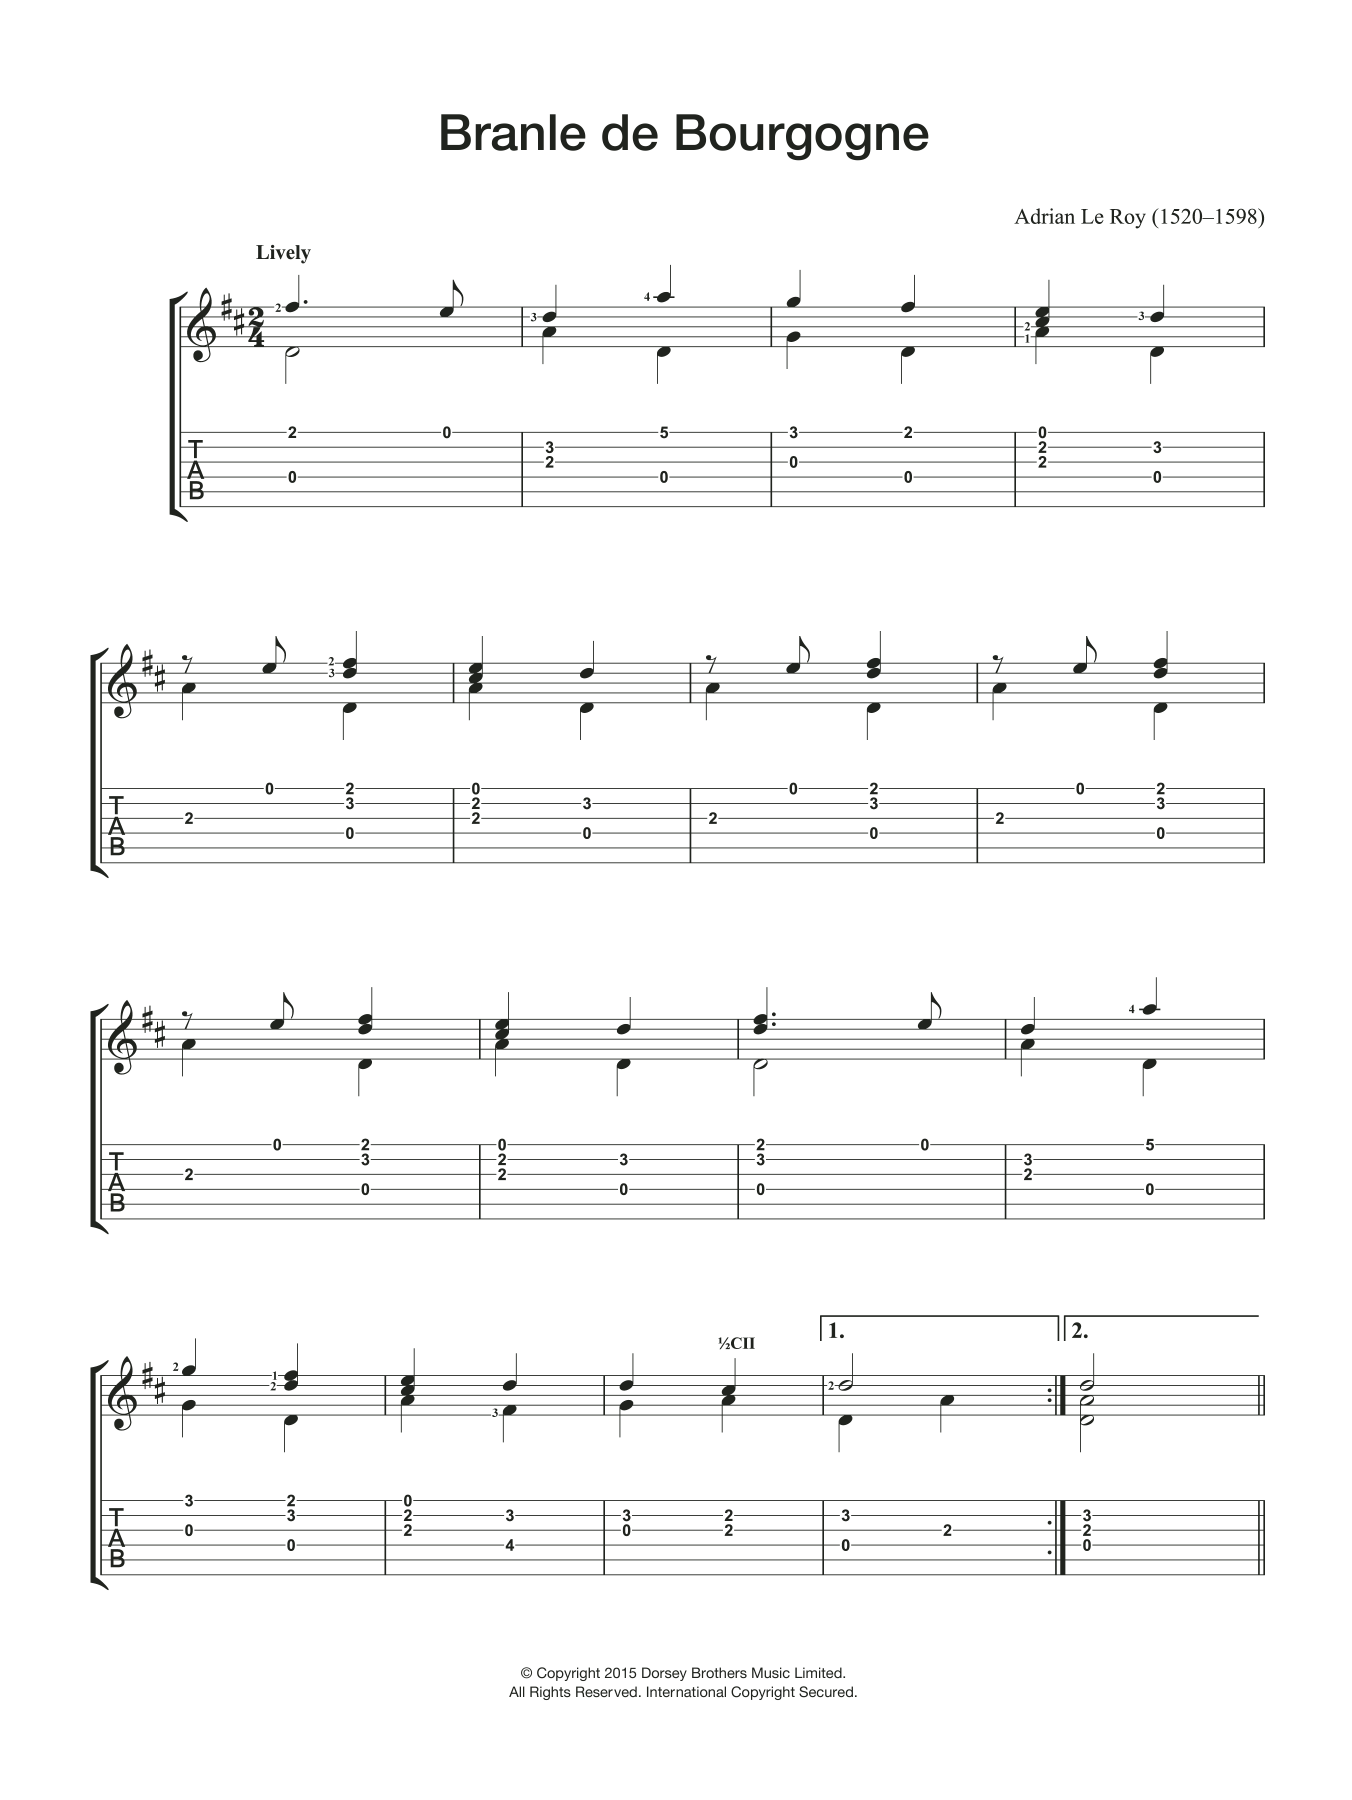 Adrien Le Roy Branle De Bourgogne Sheet Music Notes & Chords for Guitar - Download or Print PDF